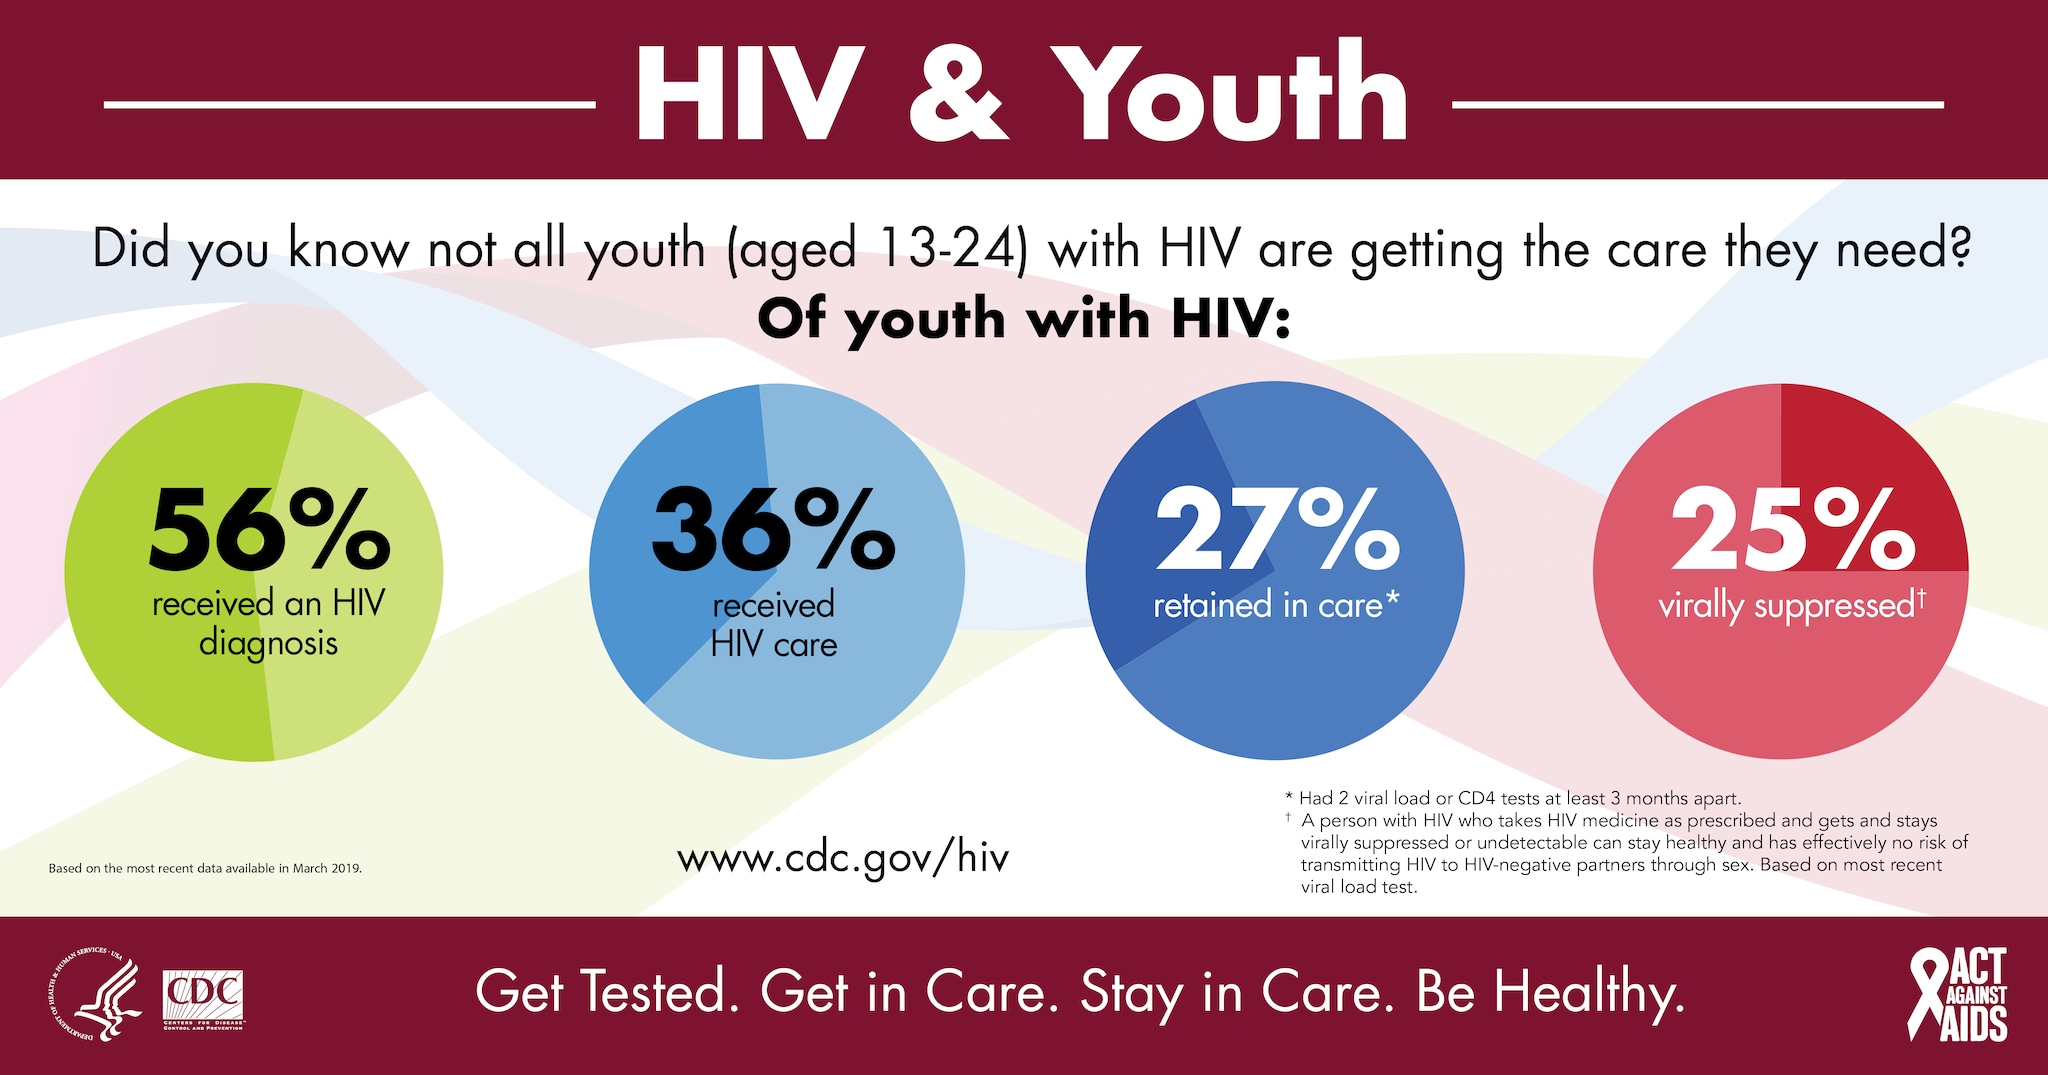 National Youth Hiv Aids Awareness Day Awareness Days Resource